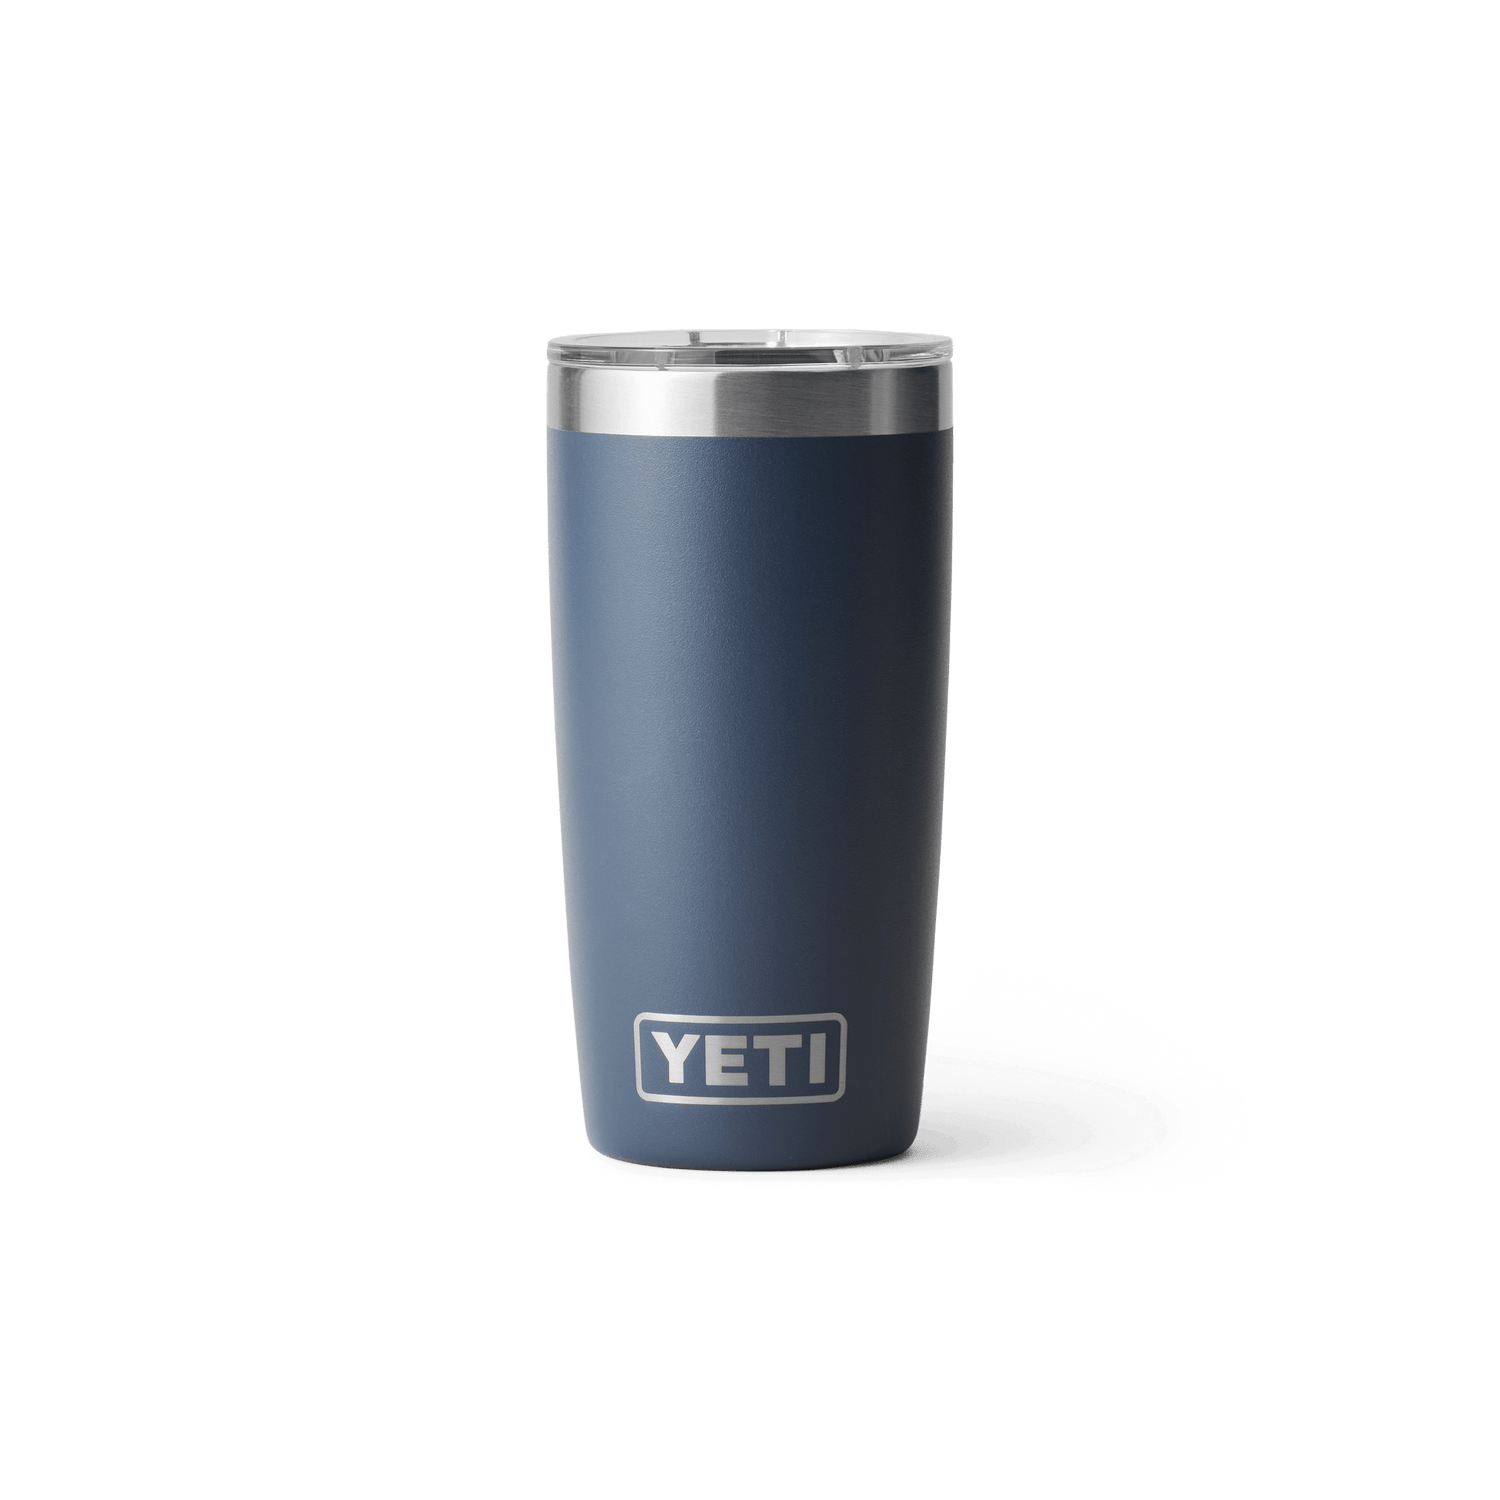 YETI Rambler Drinkware: Bottles, Mugs, Jugs, And More – YETI UK